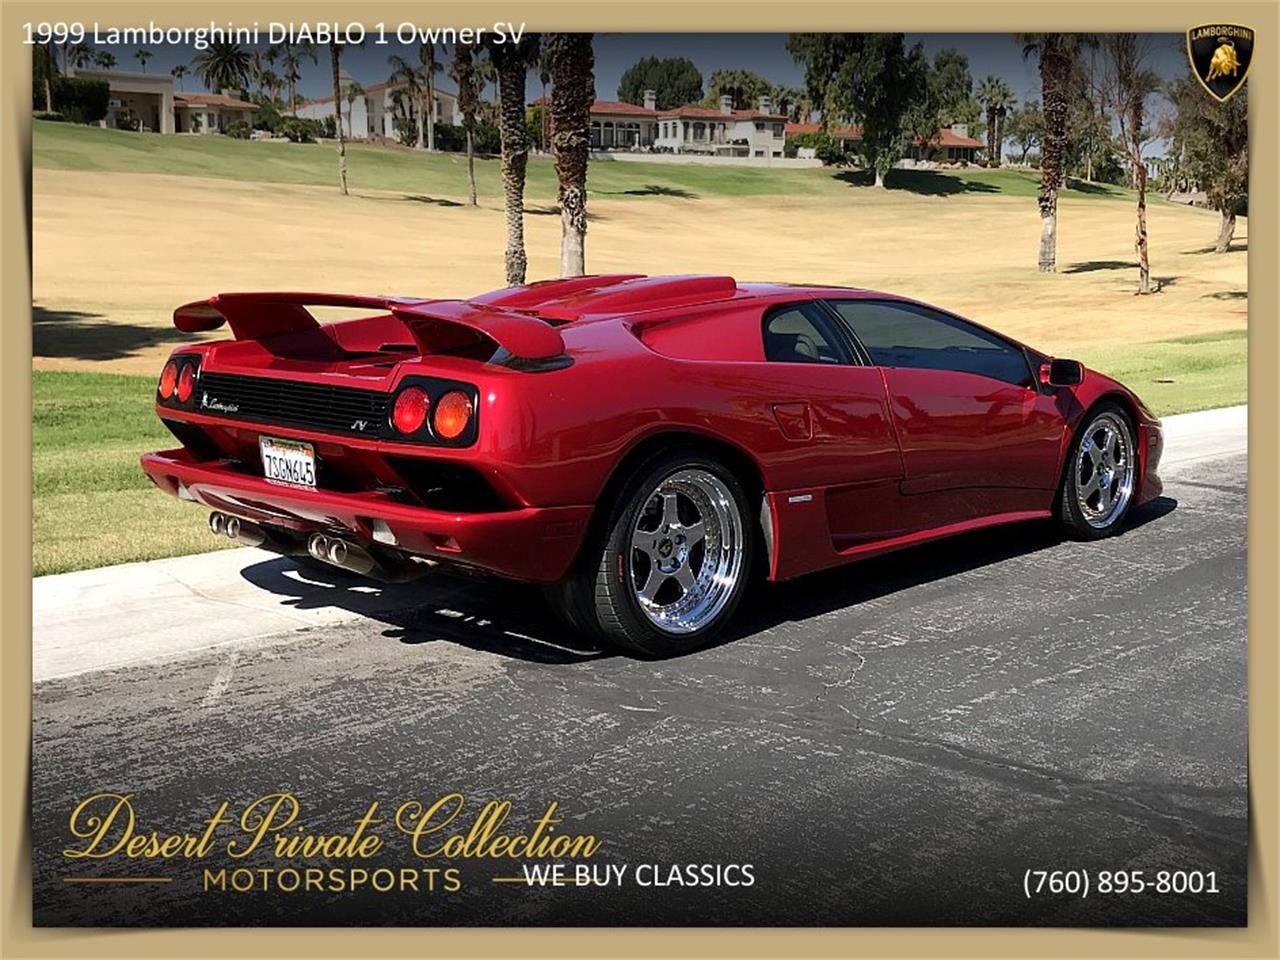 1999 Lamborghini Diablo for Sale | ClassicCars.com | CC ...